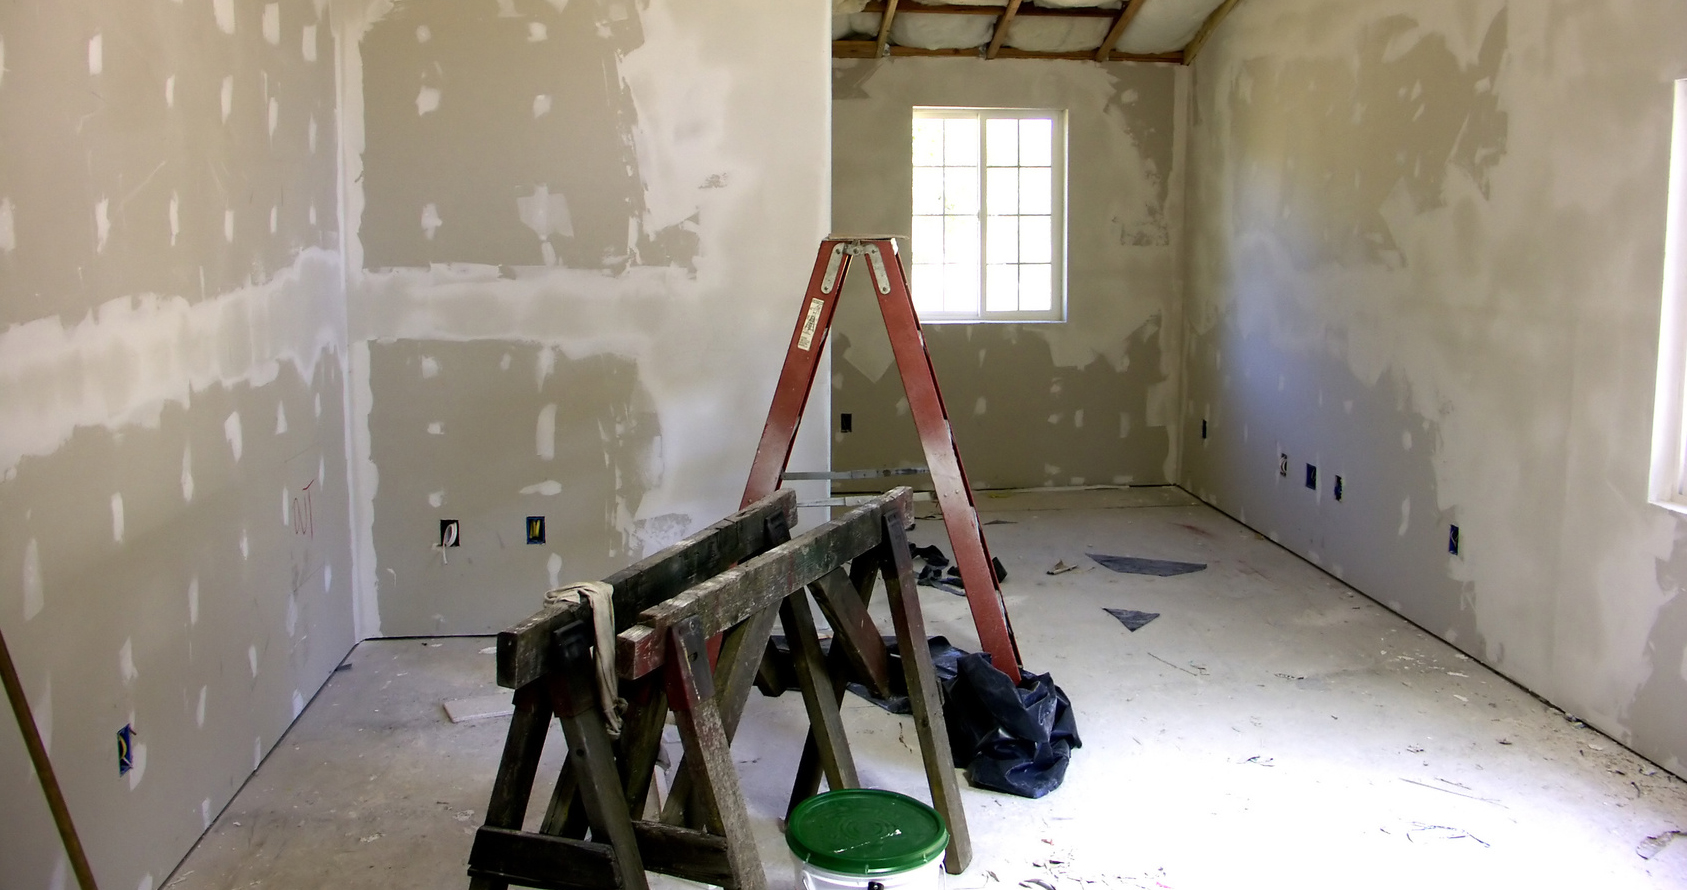 Drywall Repair and Installation